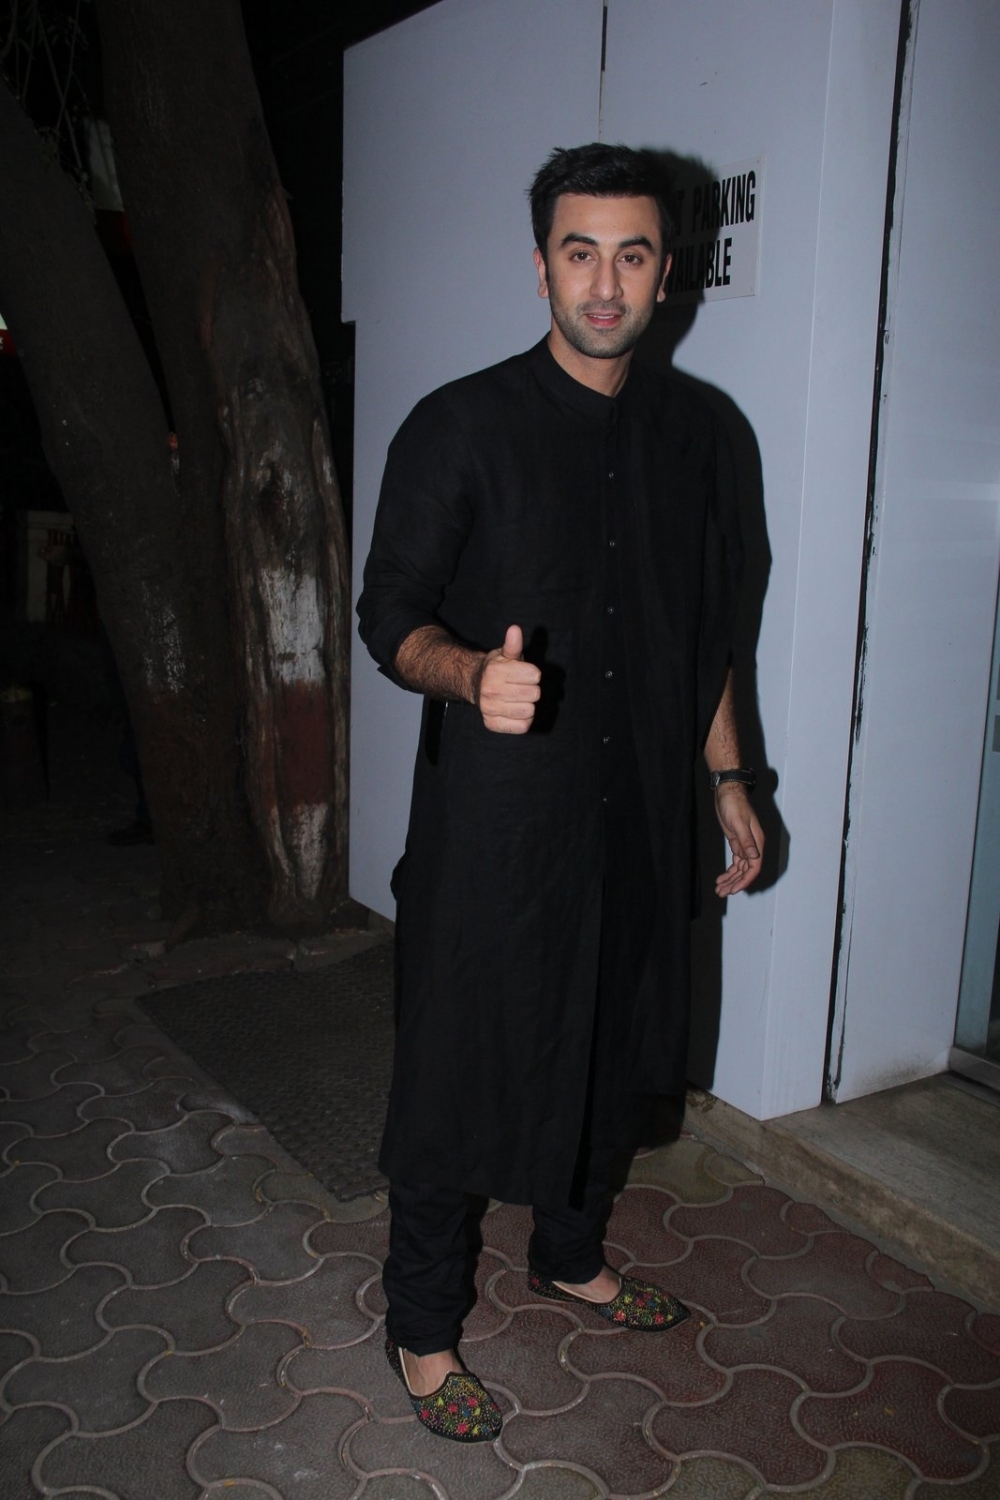 Ranbir Kapoor at 'Tamasha' dinner party